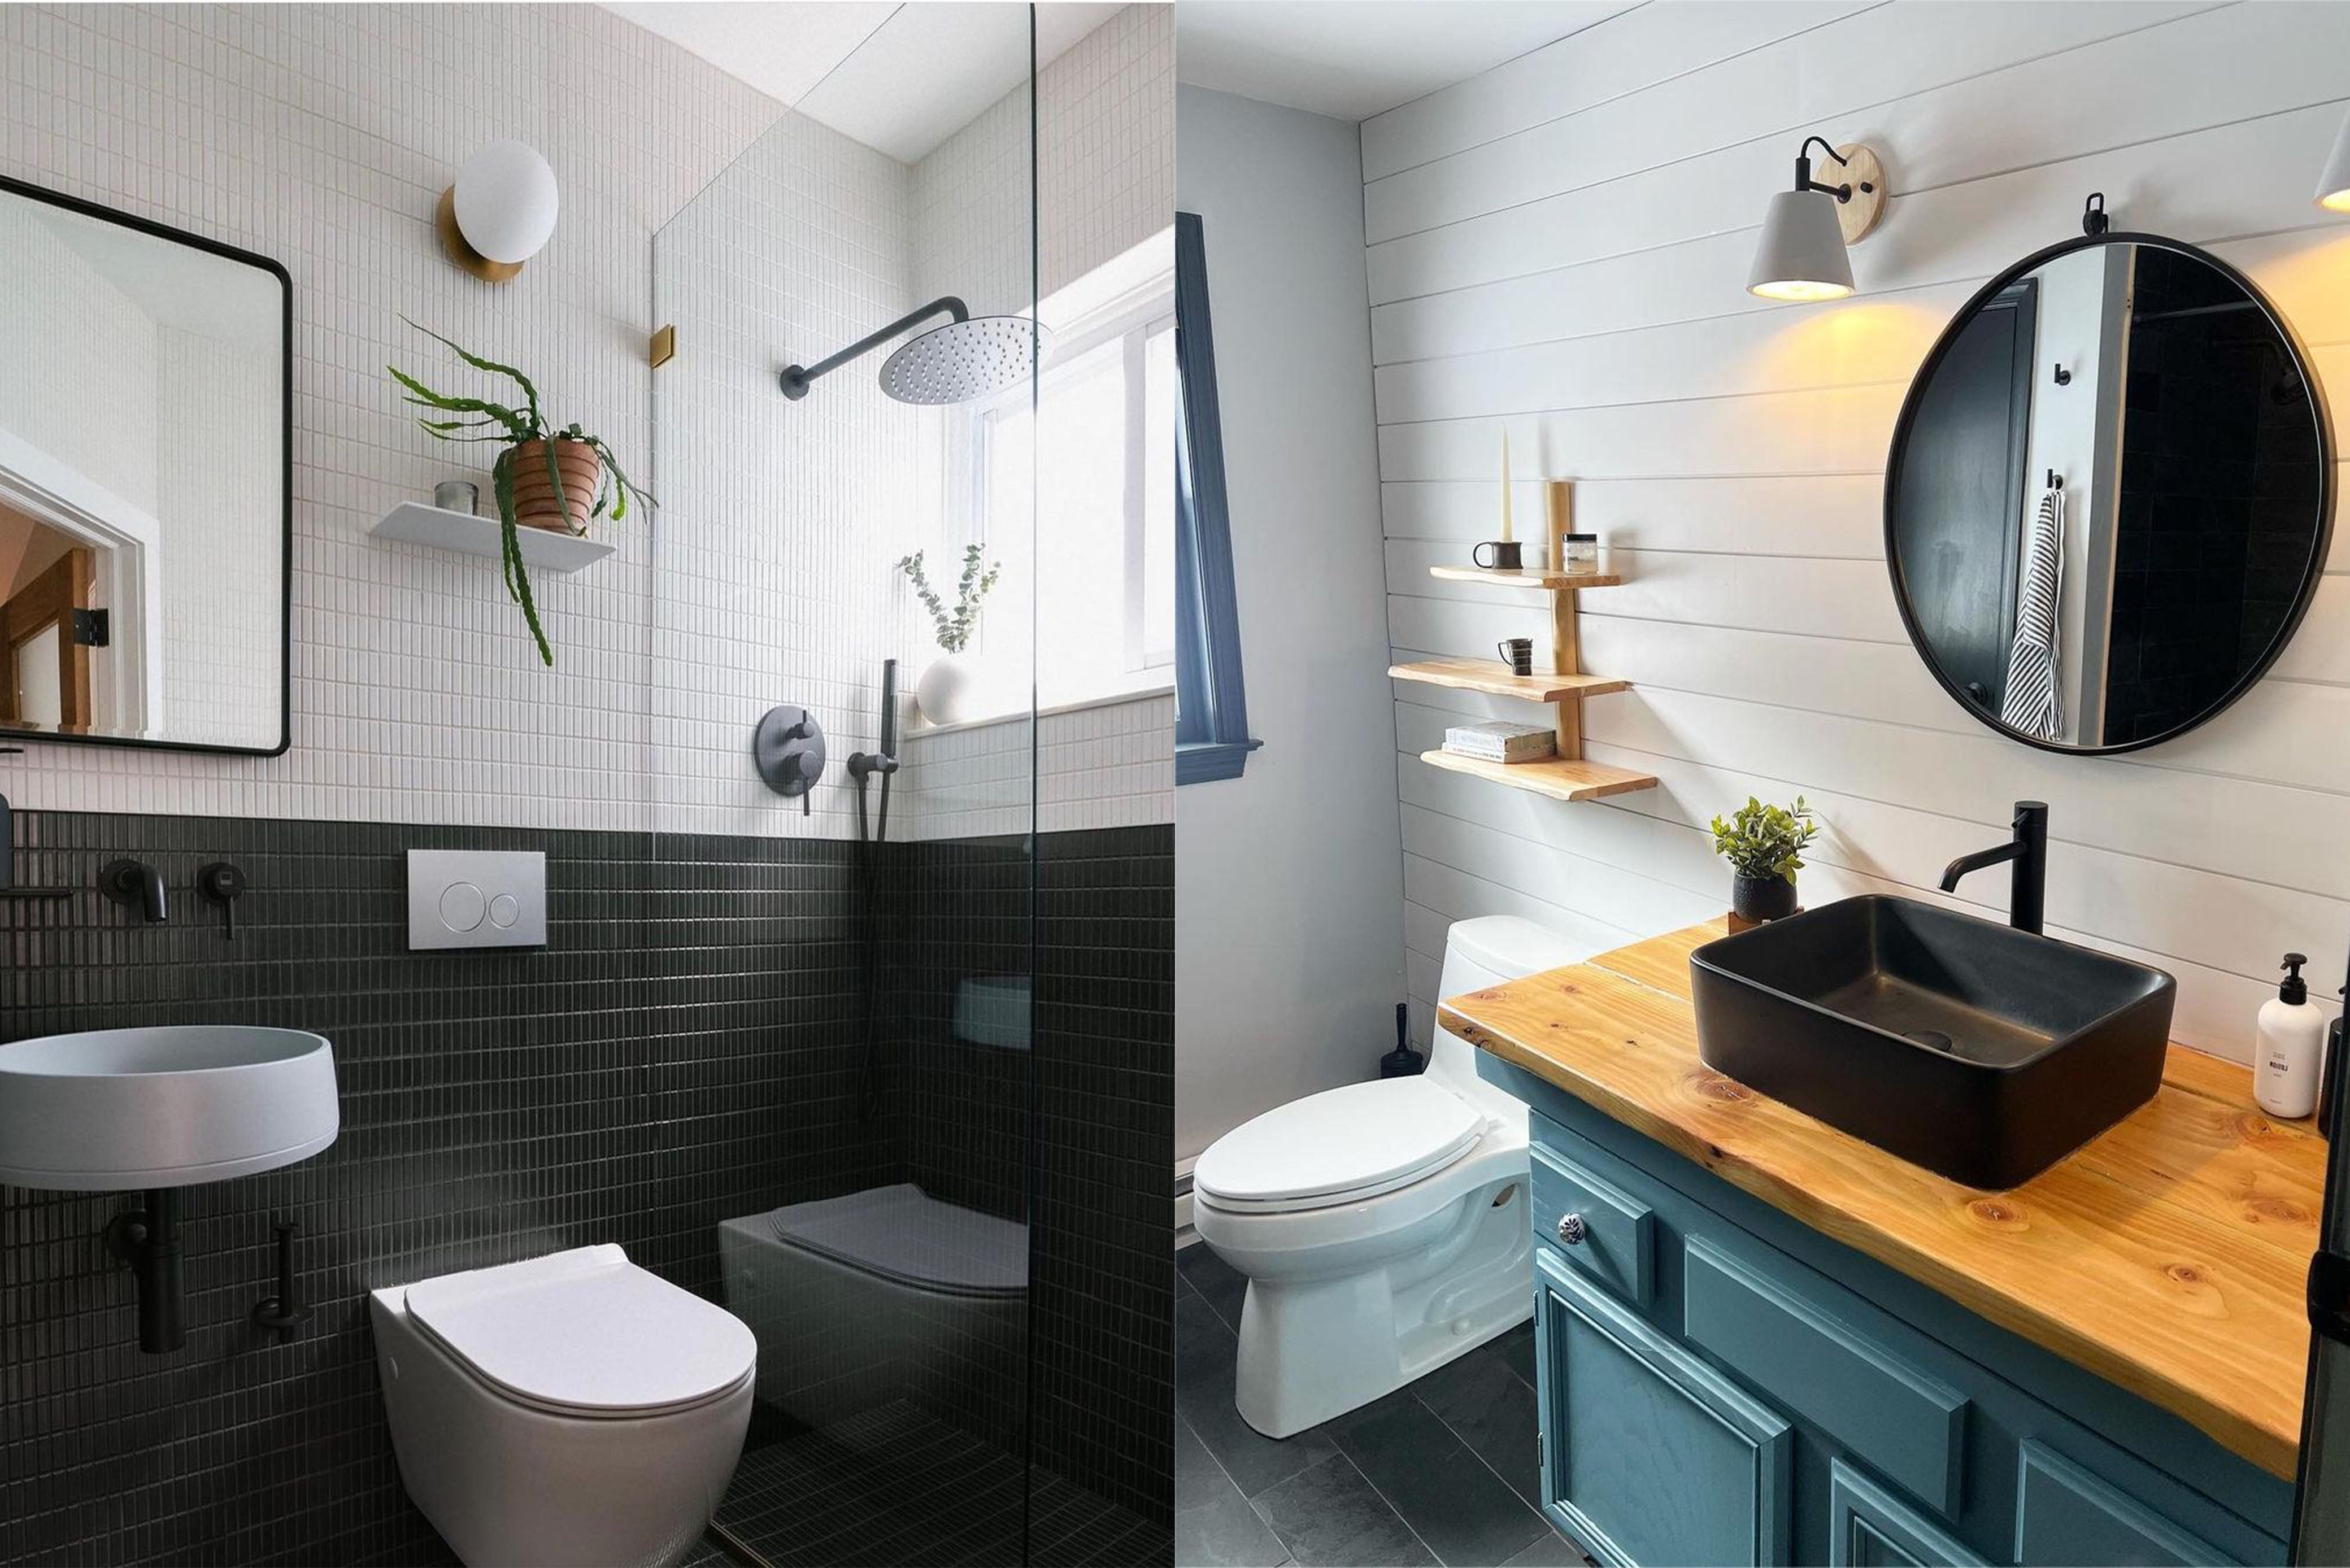 bathroom counter organizer for men - Google Search  Large bathroom  cabinets, Bathroom storage solutions, Bathroom decor